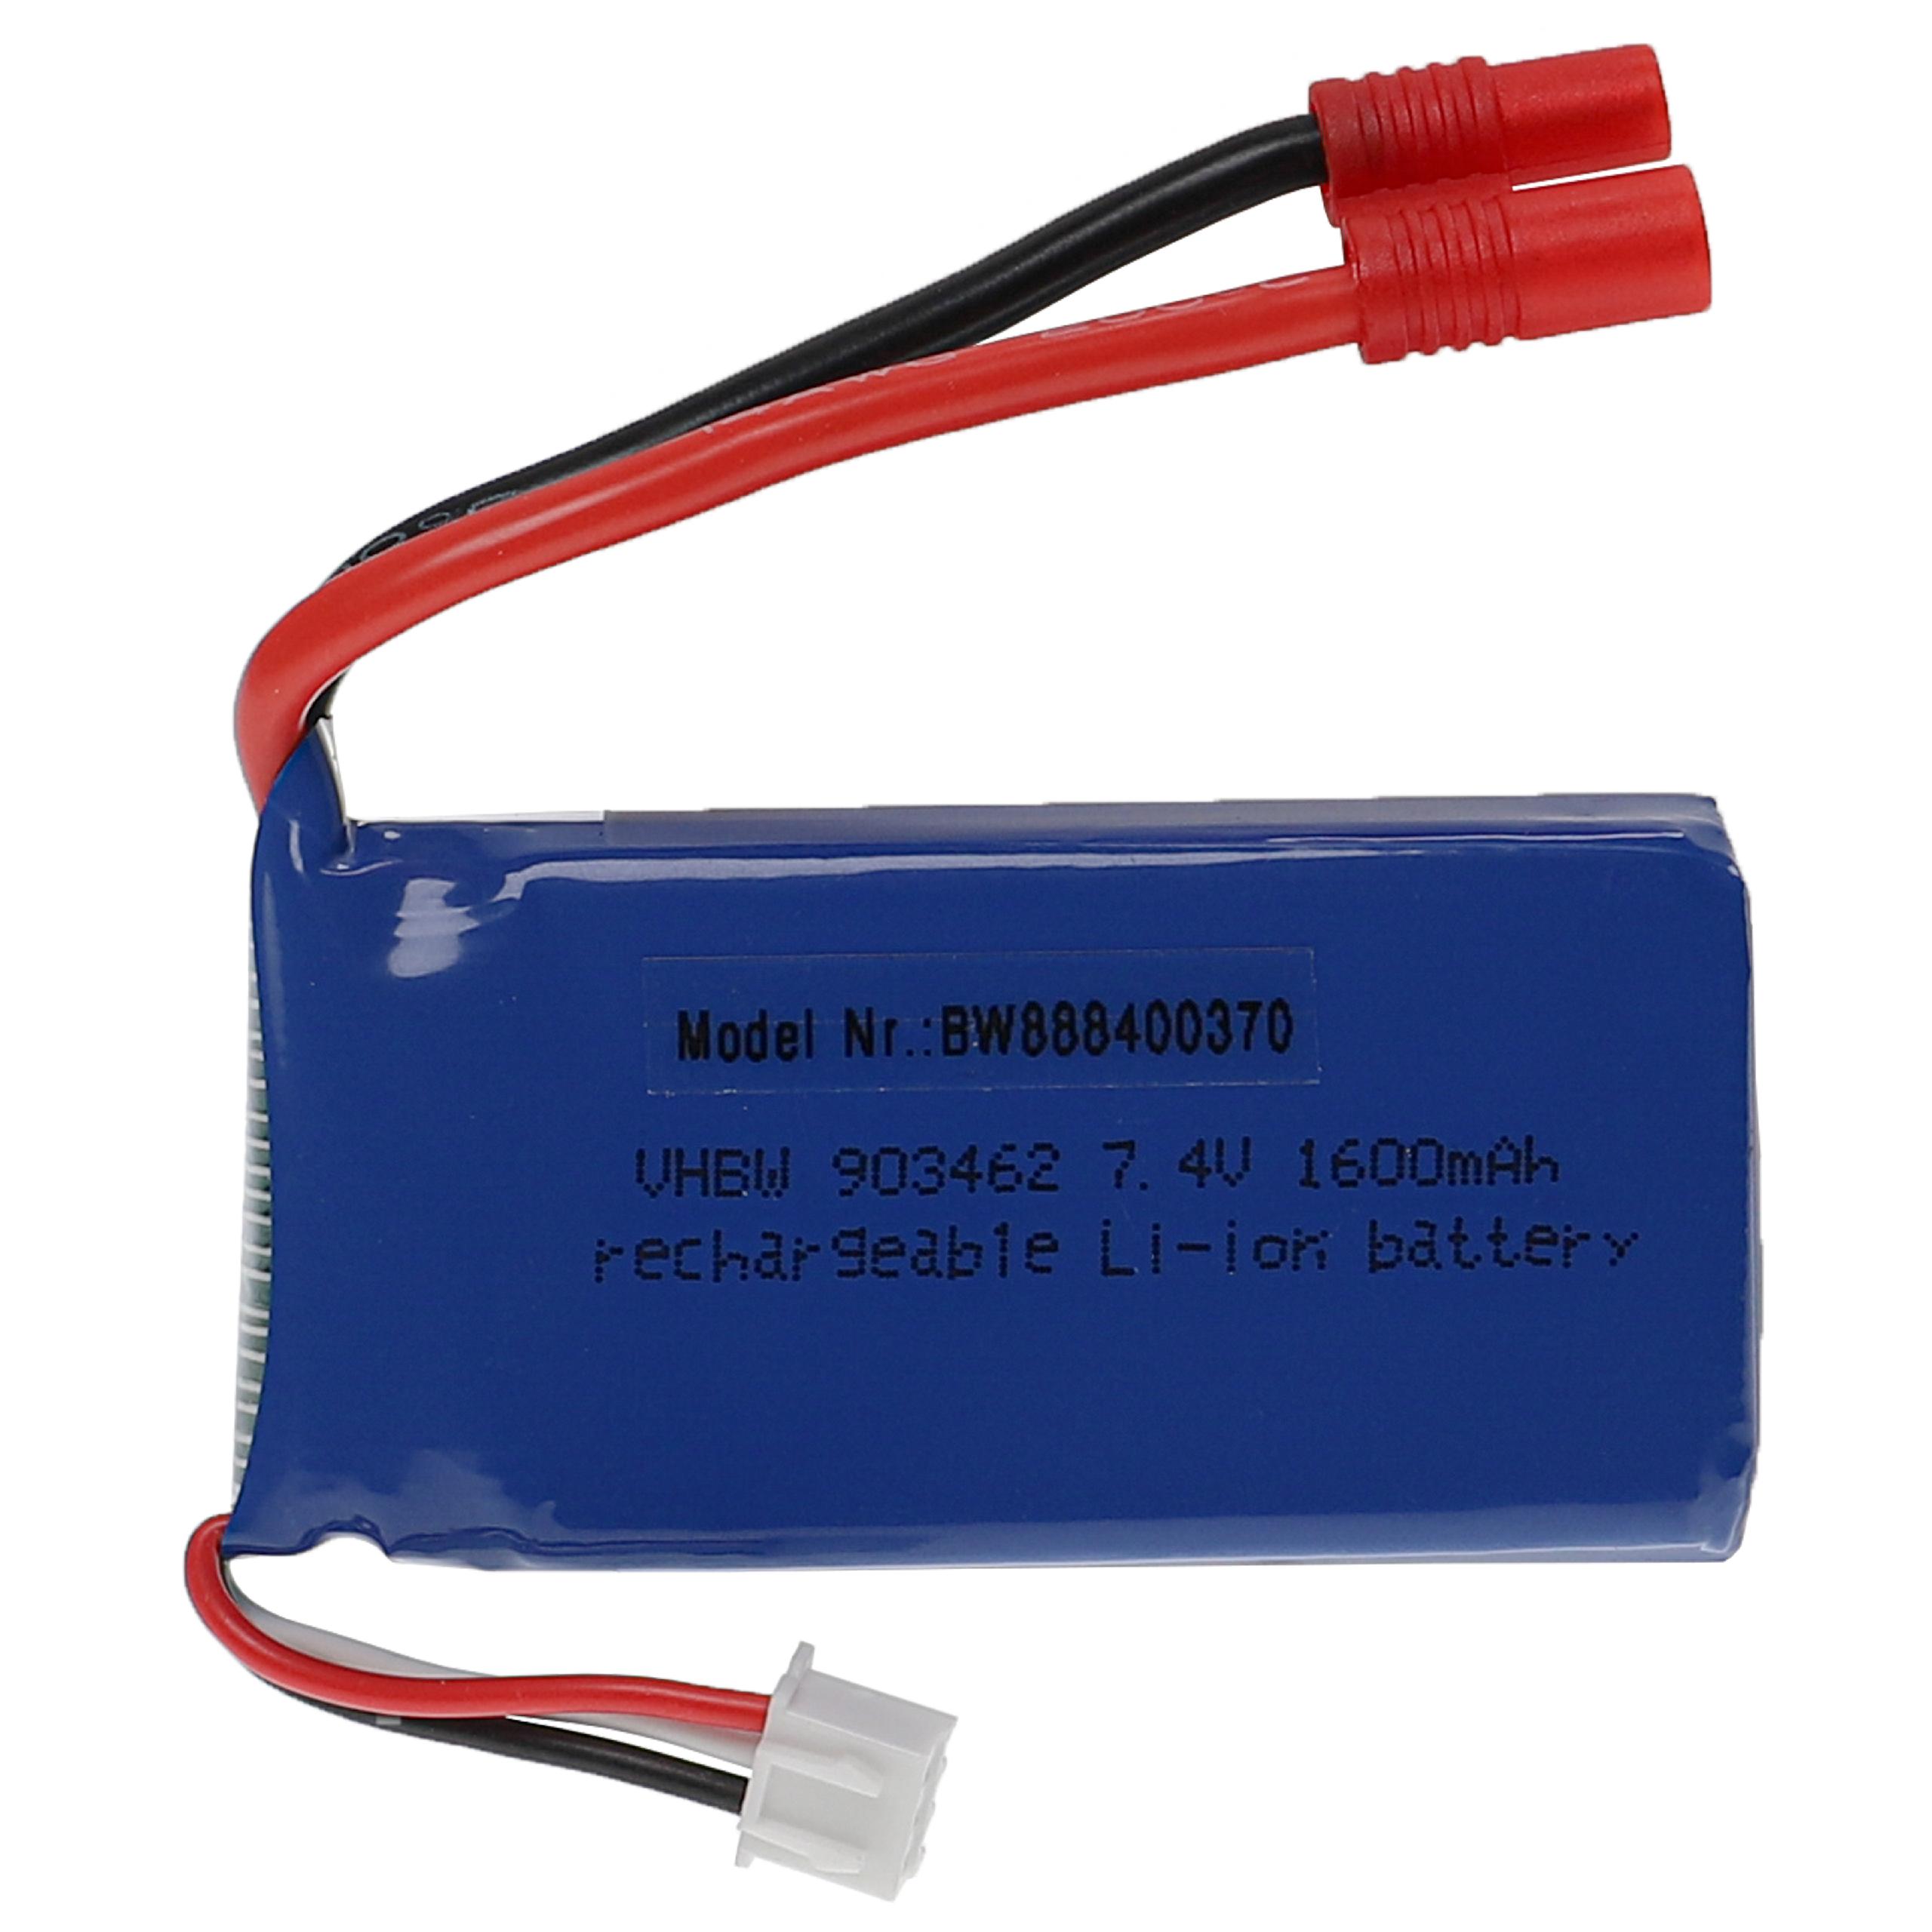 Batteria per modellini RC - 1600mAh 7,4V Li-Poly, connettore banana 3,5 mm